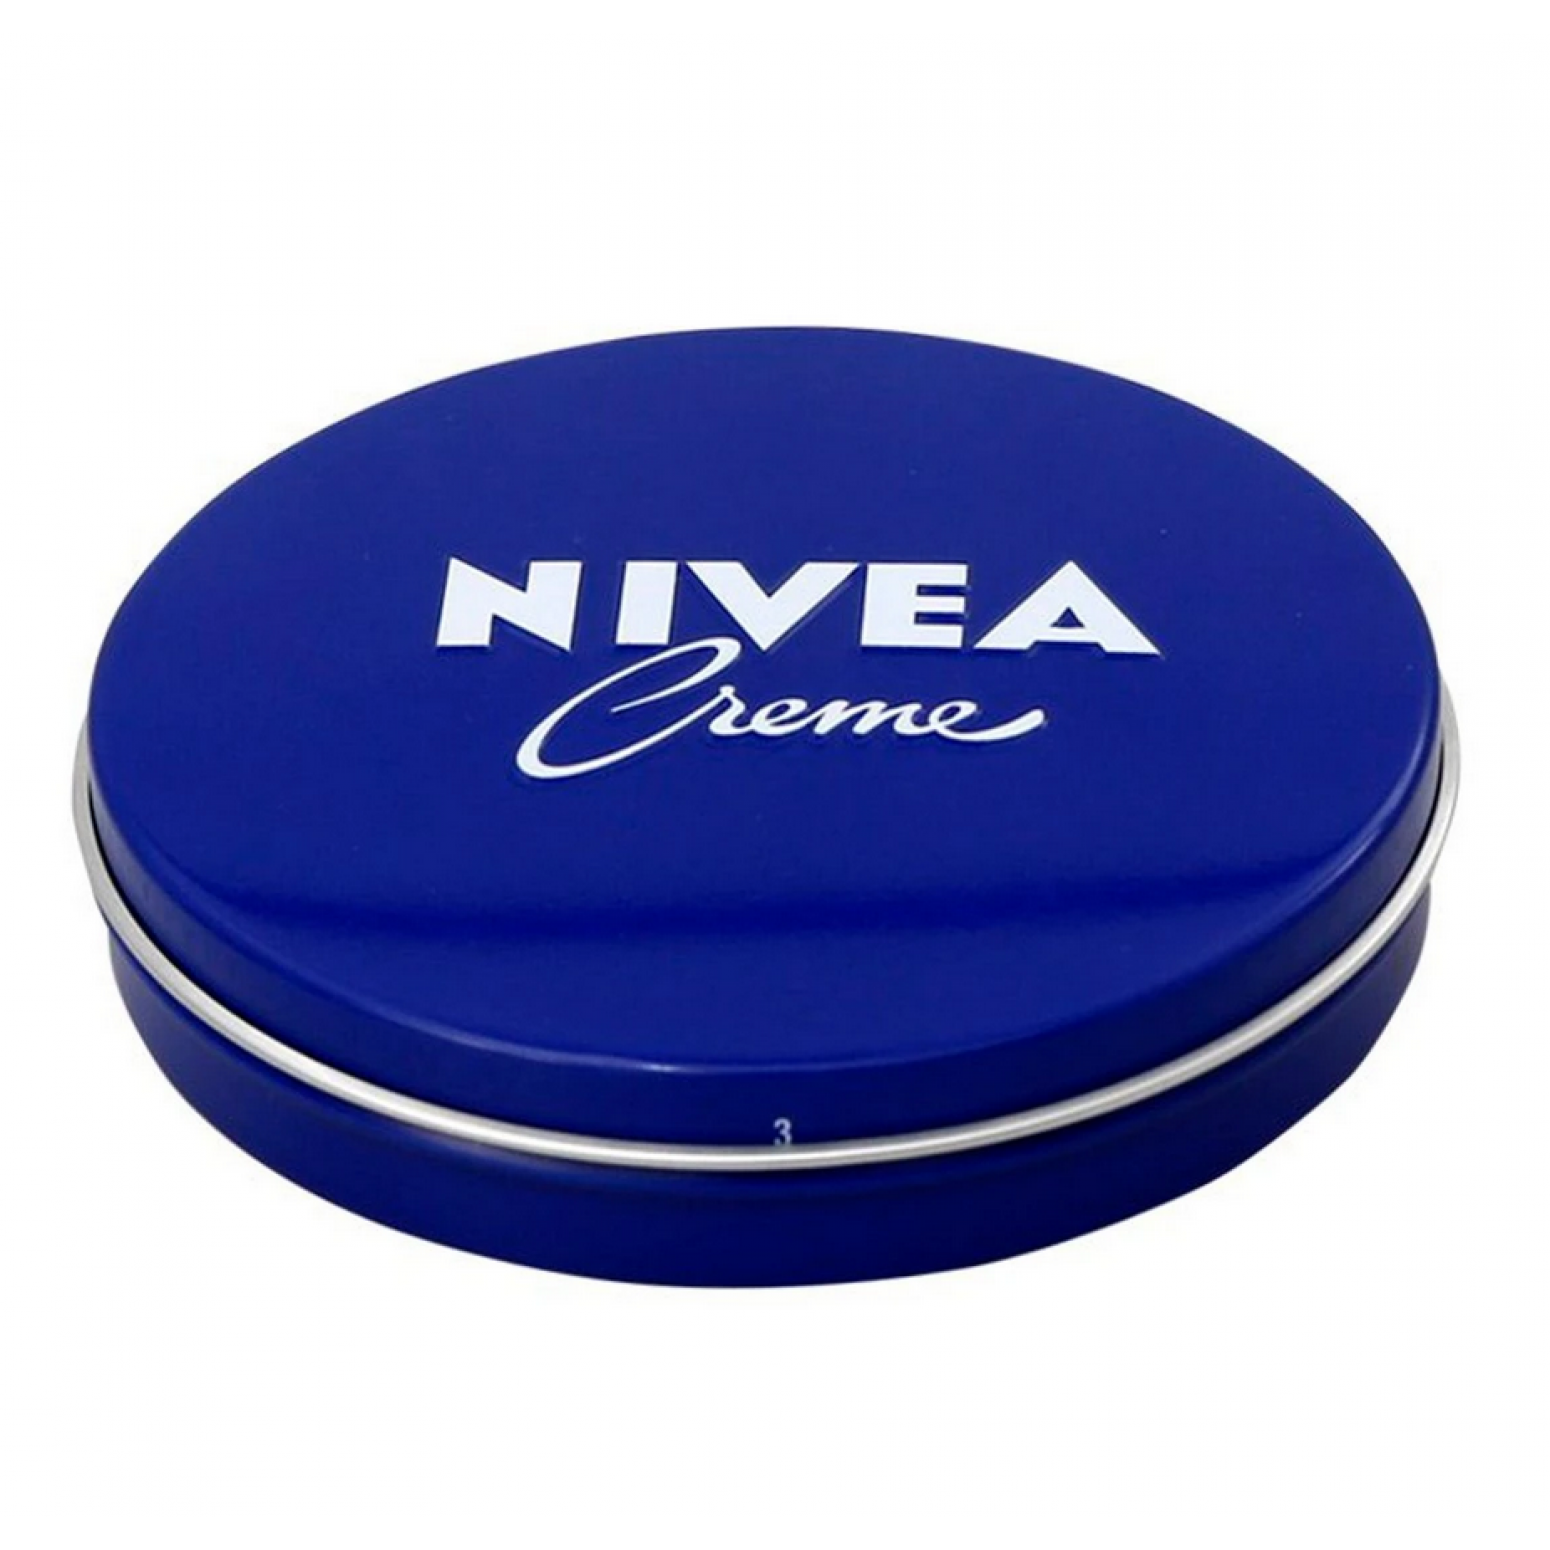 Nivea Cream skin care cream 60ml